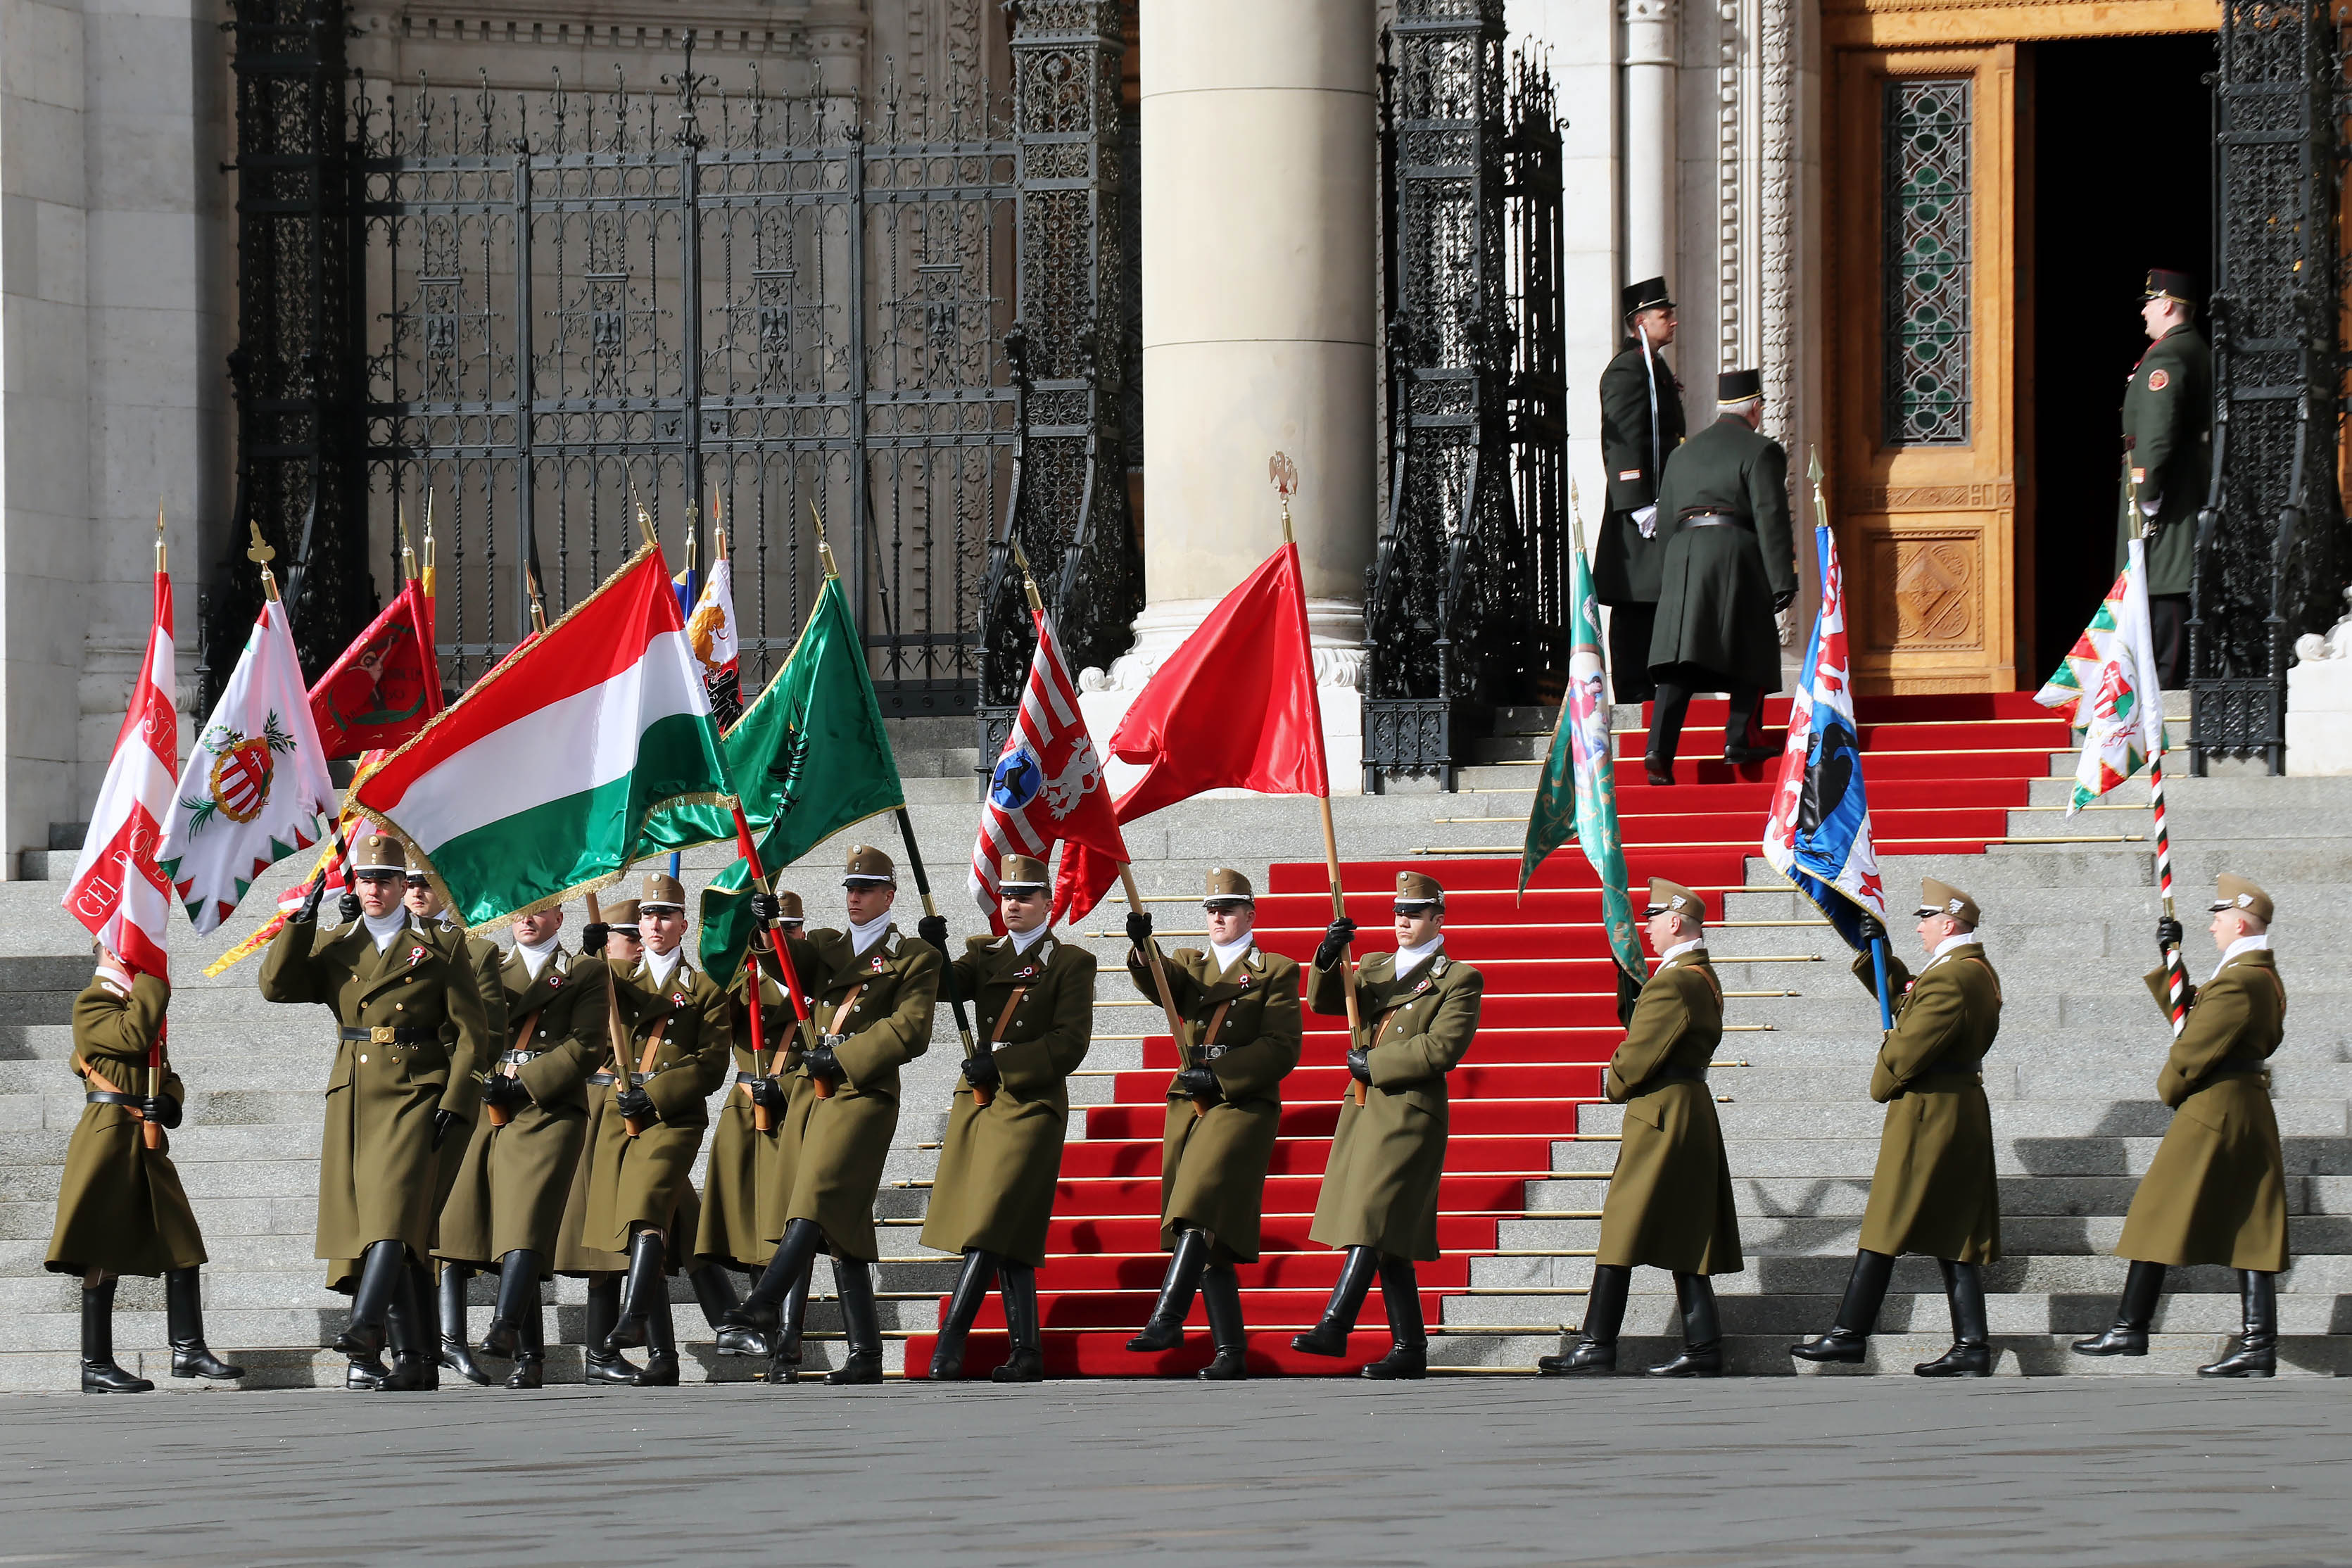 March 15 Hungary National flag hoisted